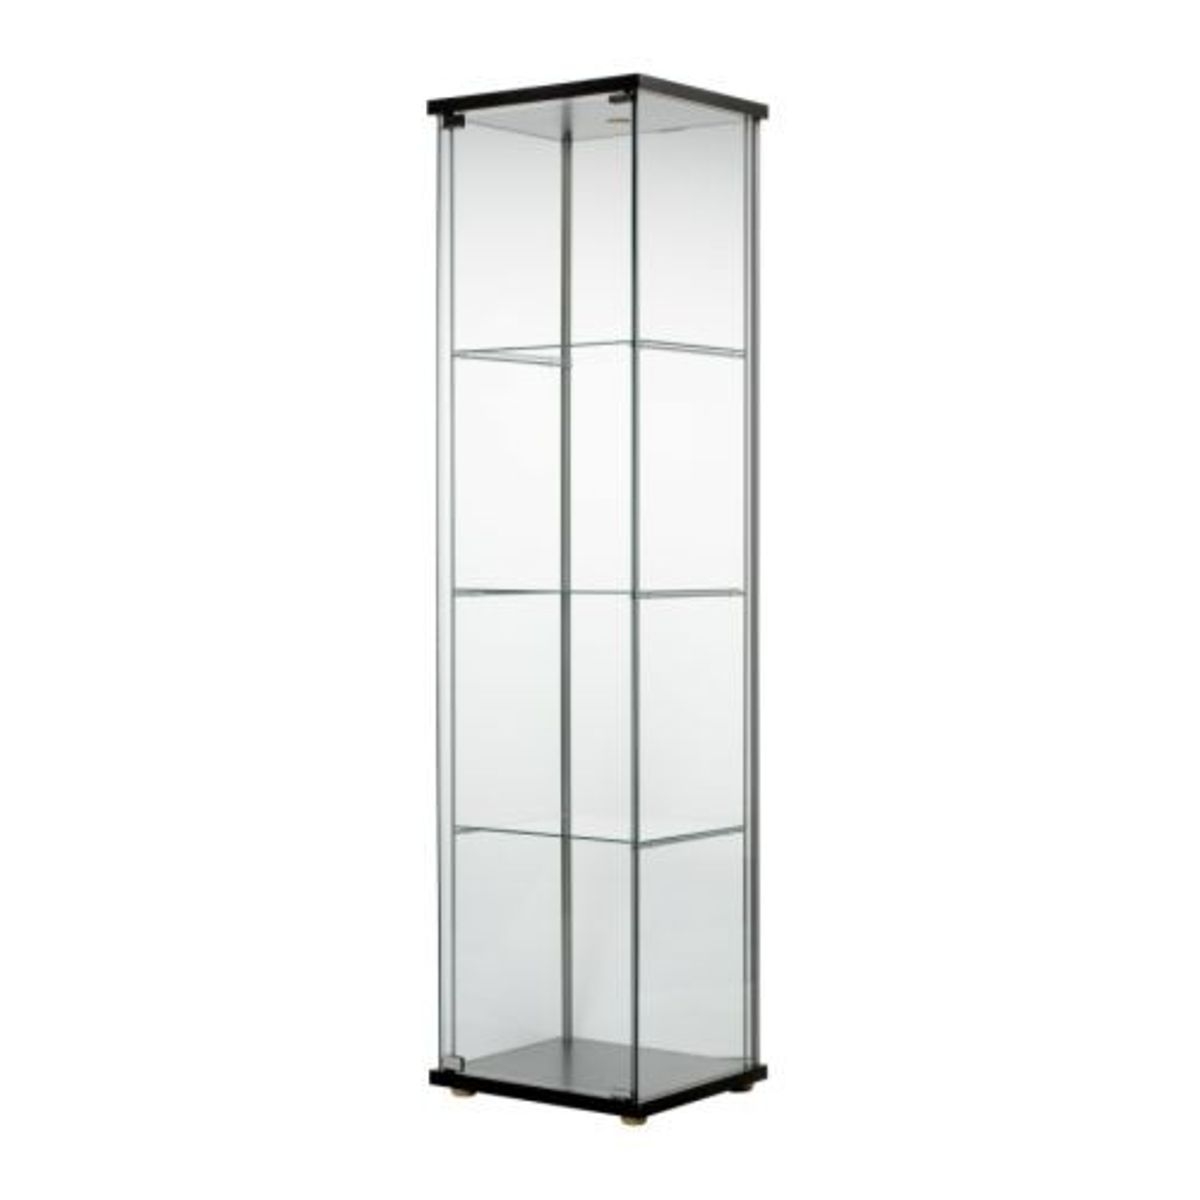 Glass curio cabinets